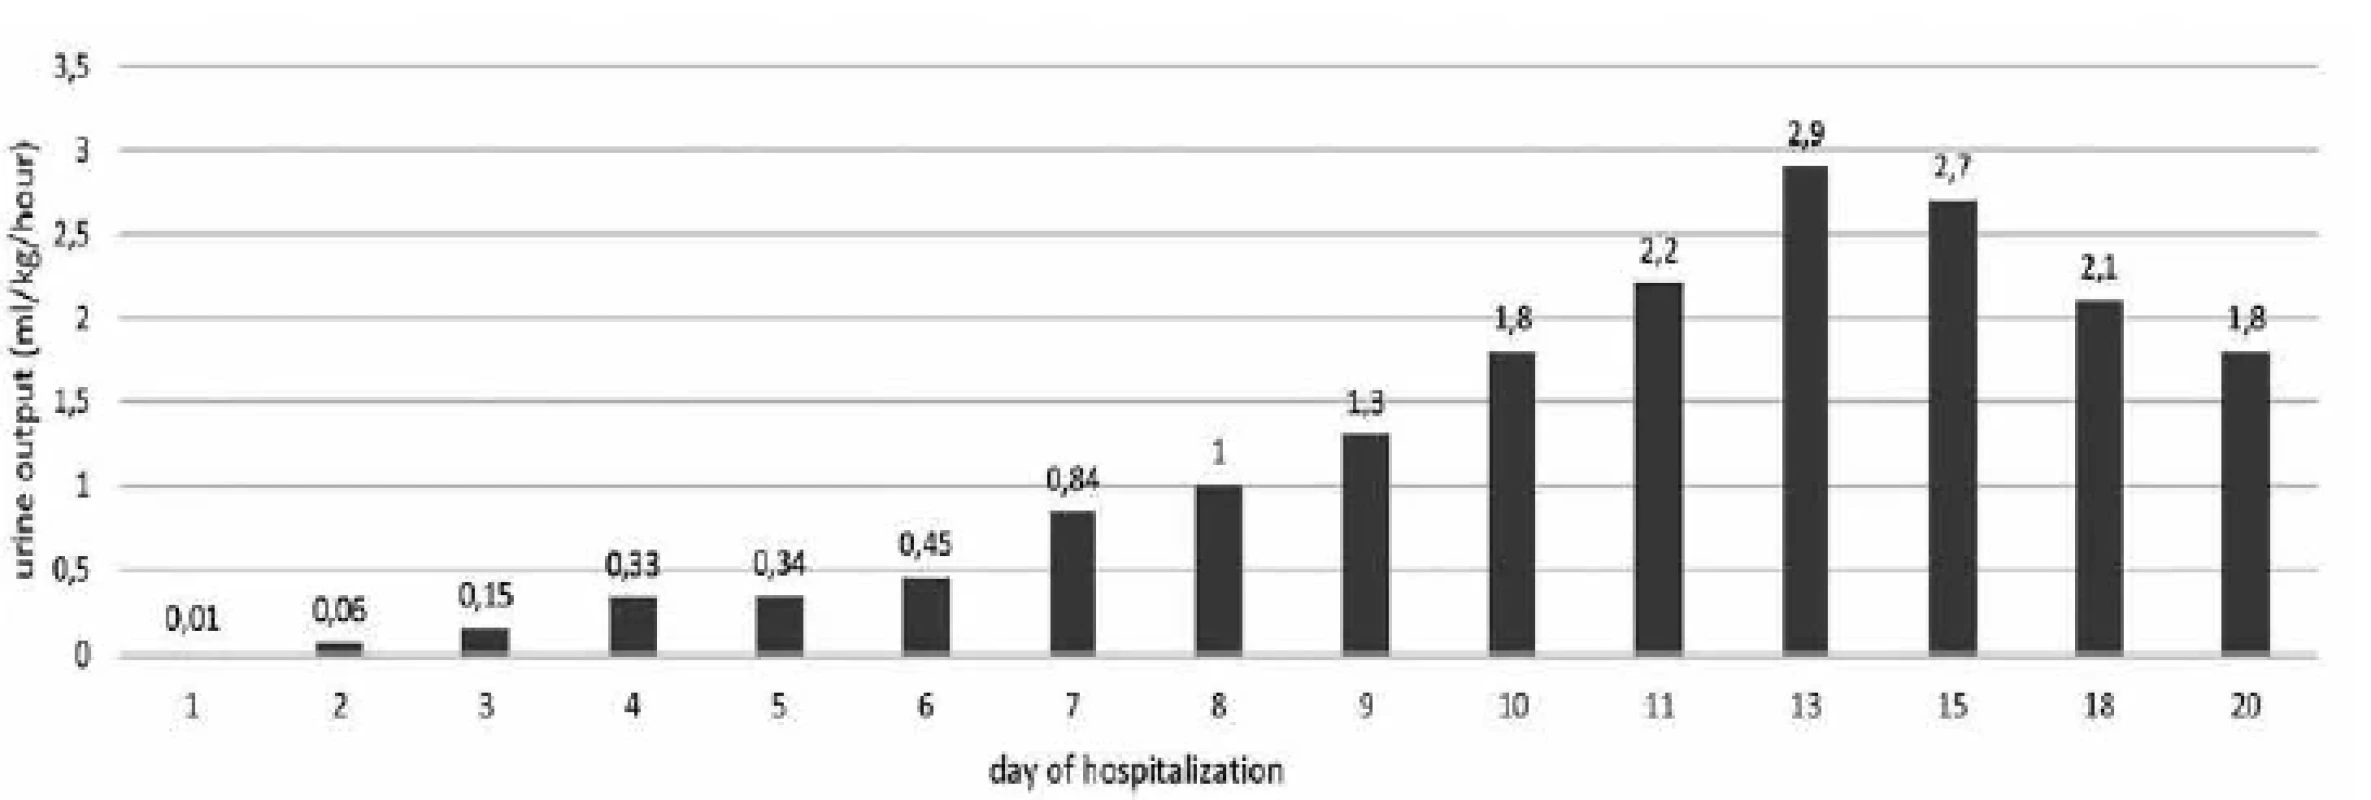 Development of urine output during hospitalization